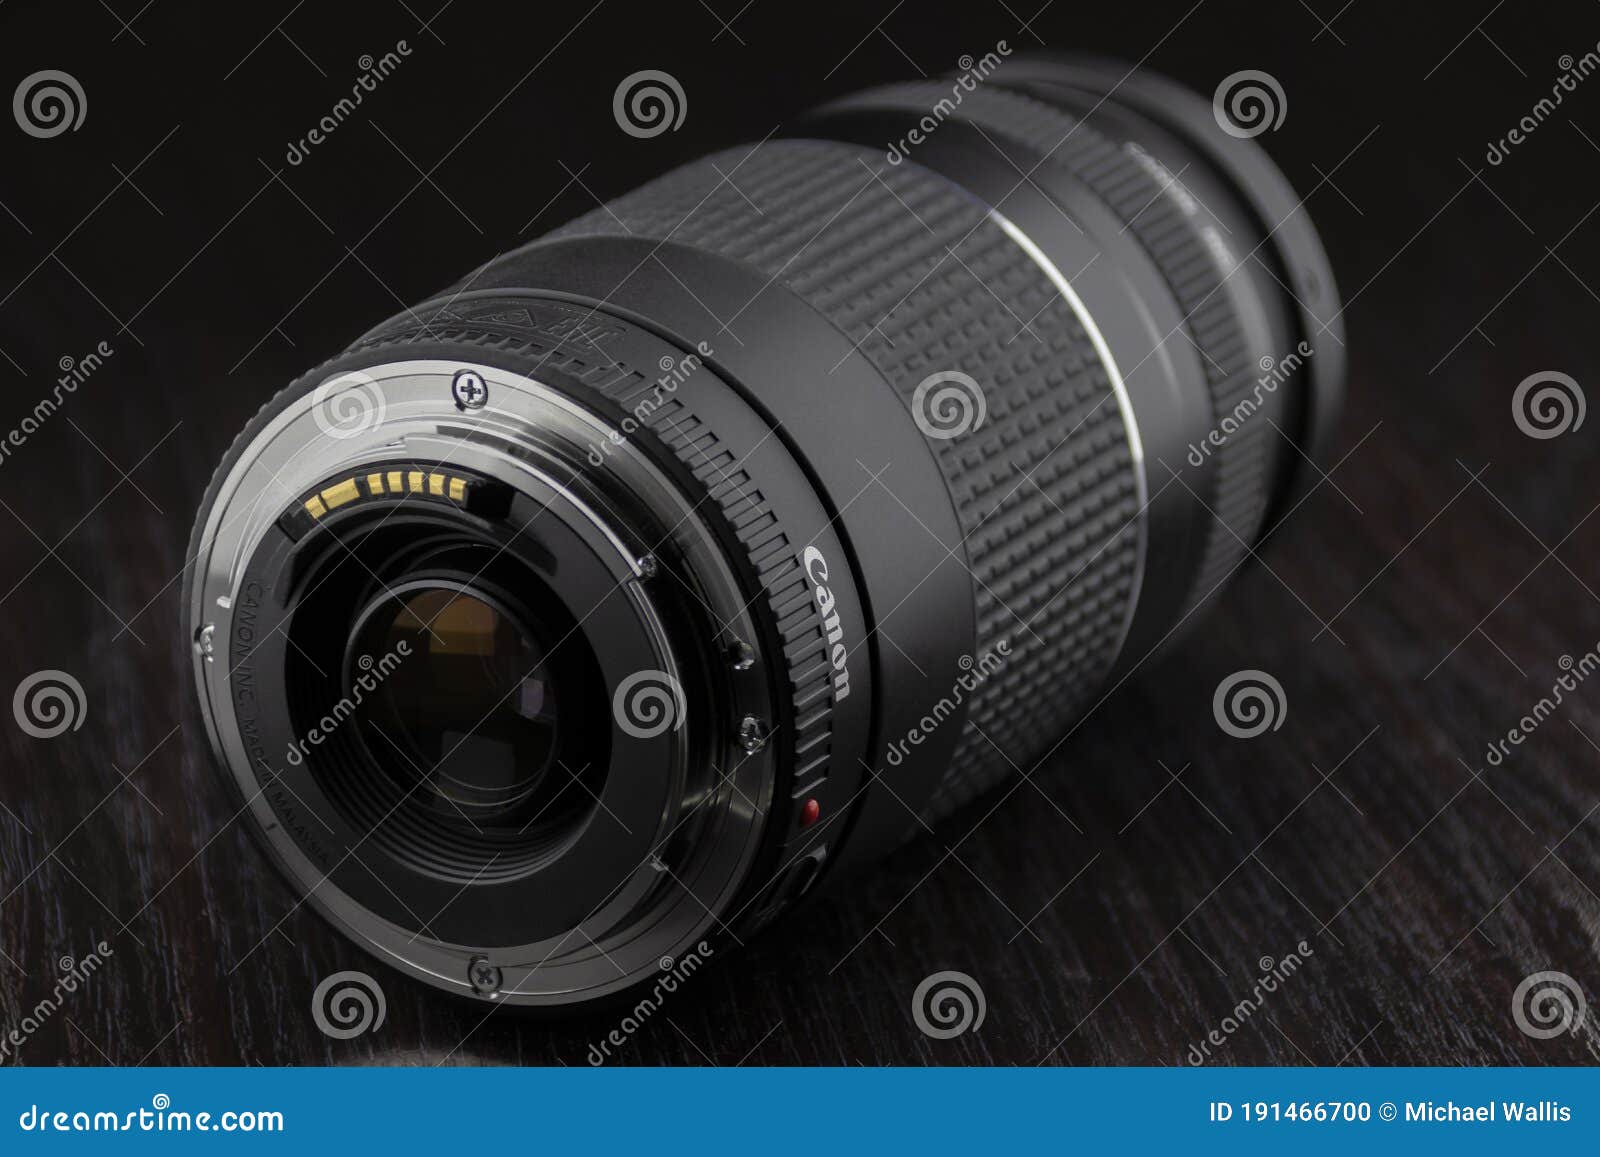 Canon 75 300 Telephoto Lens Editorial Image Image Of Aperture Camera